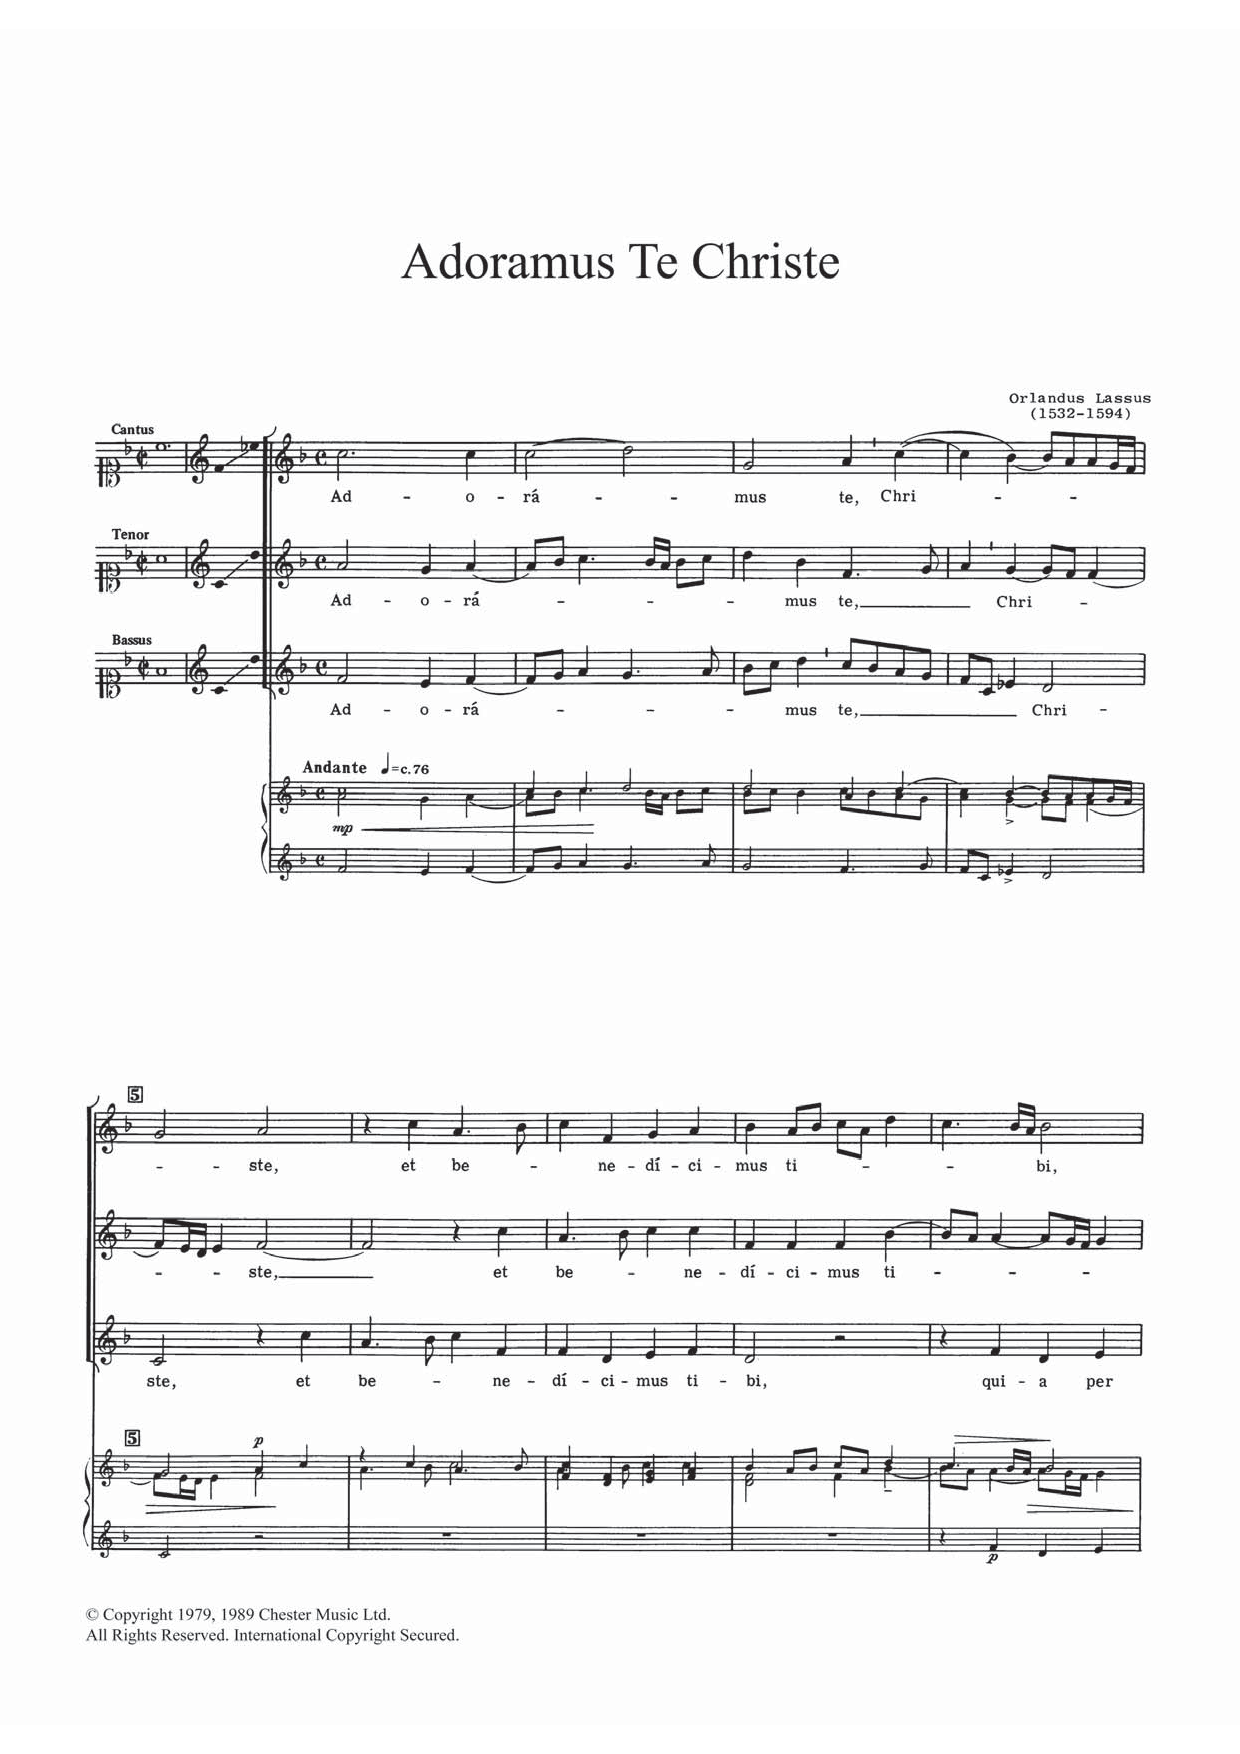 Orlandus Lassus Adoramus Te Christe sheet music notes and chords arranged for SATB Choir